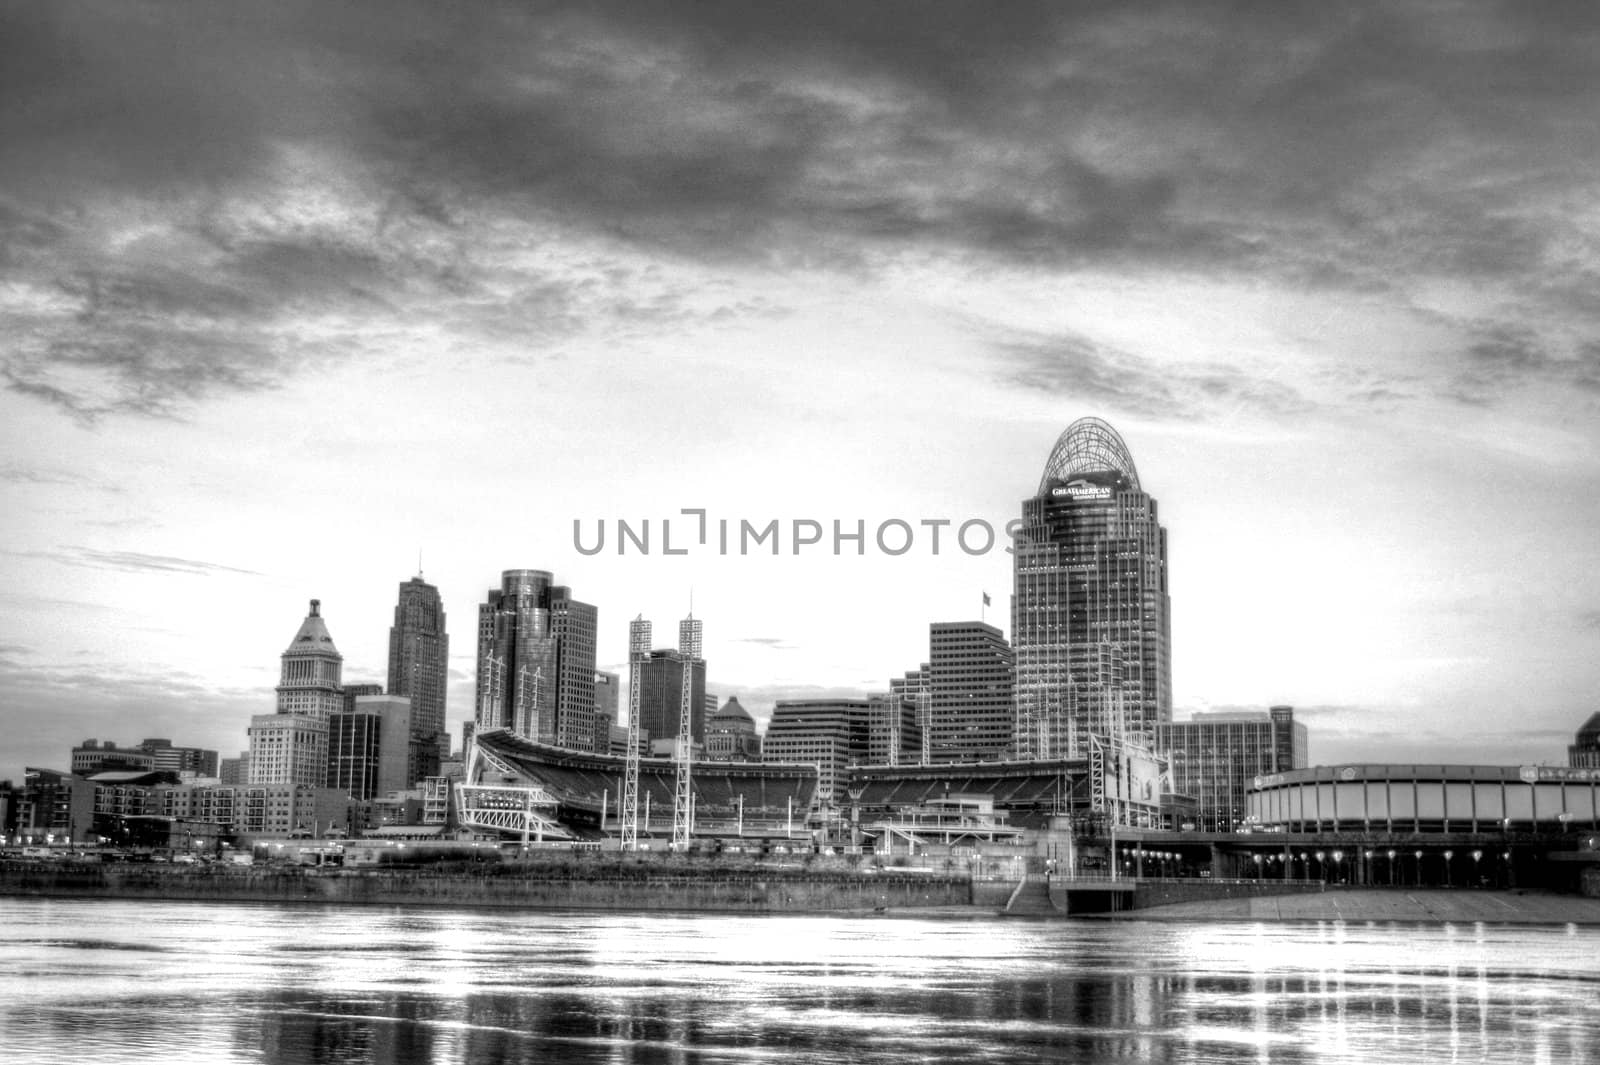 7am, January 16, 2012 Cincinnati Ohio skyline, editorial, as seen from the riverbank in Newport Kentucky